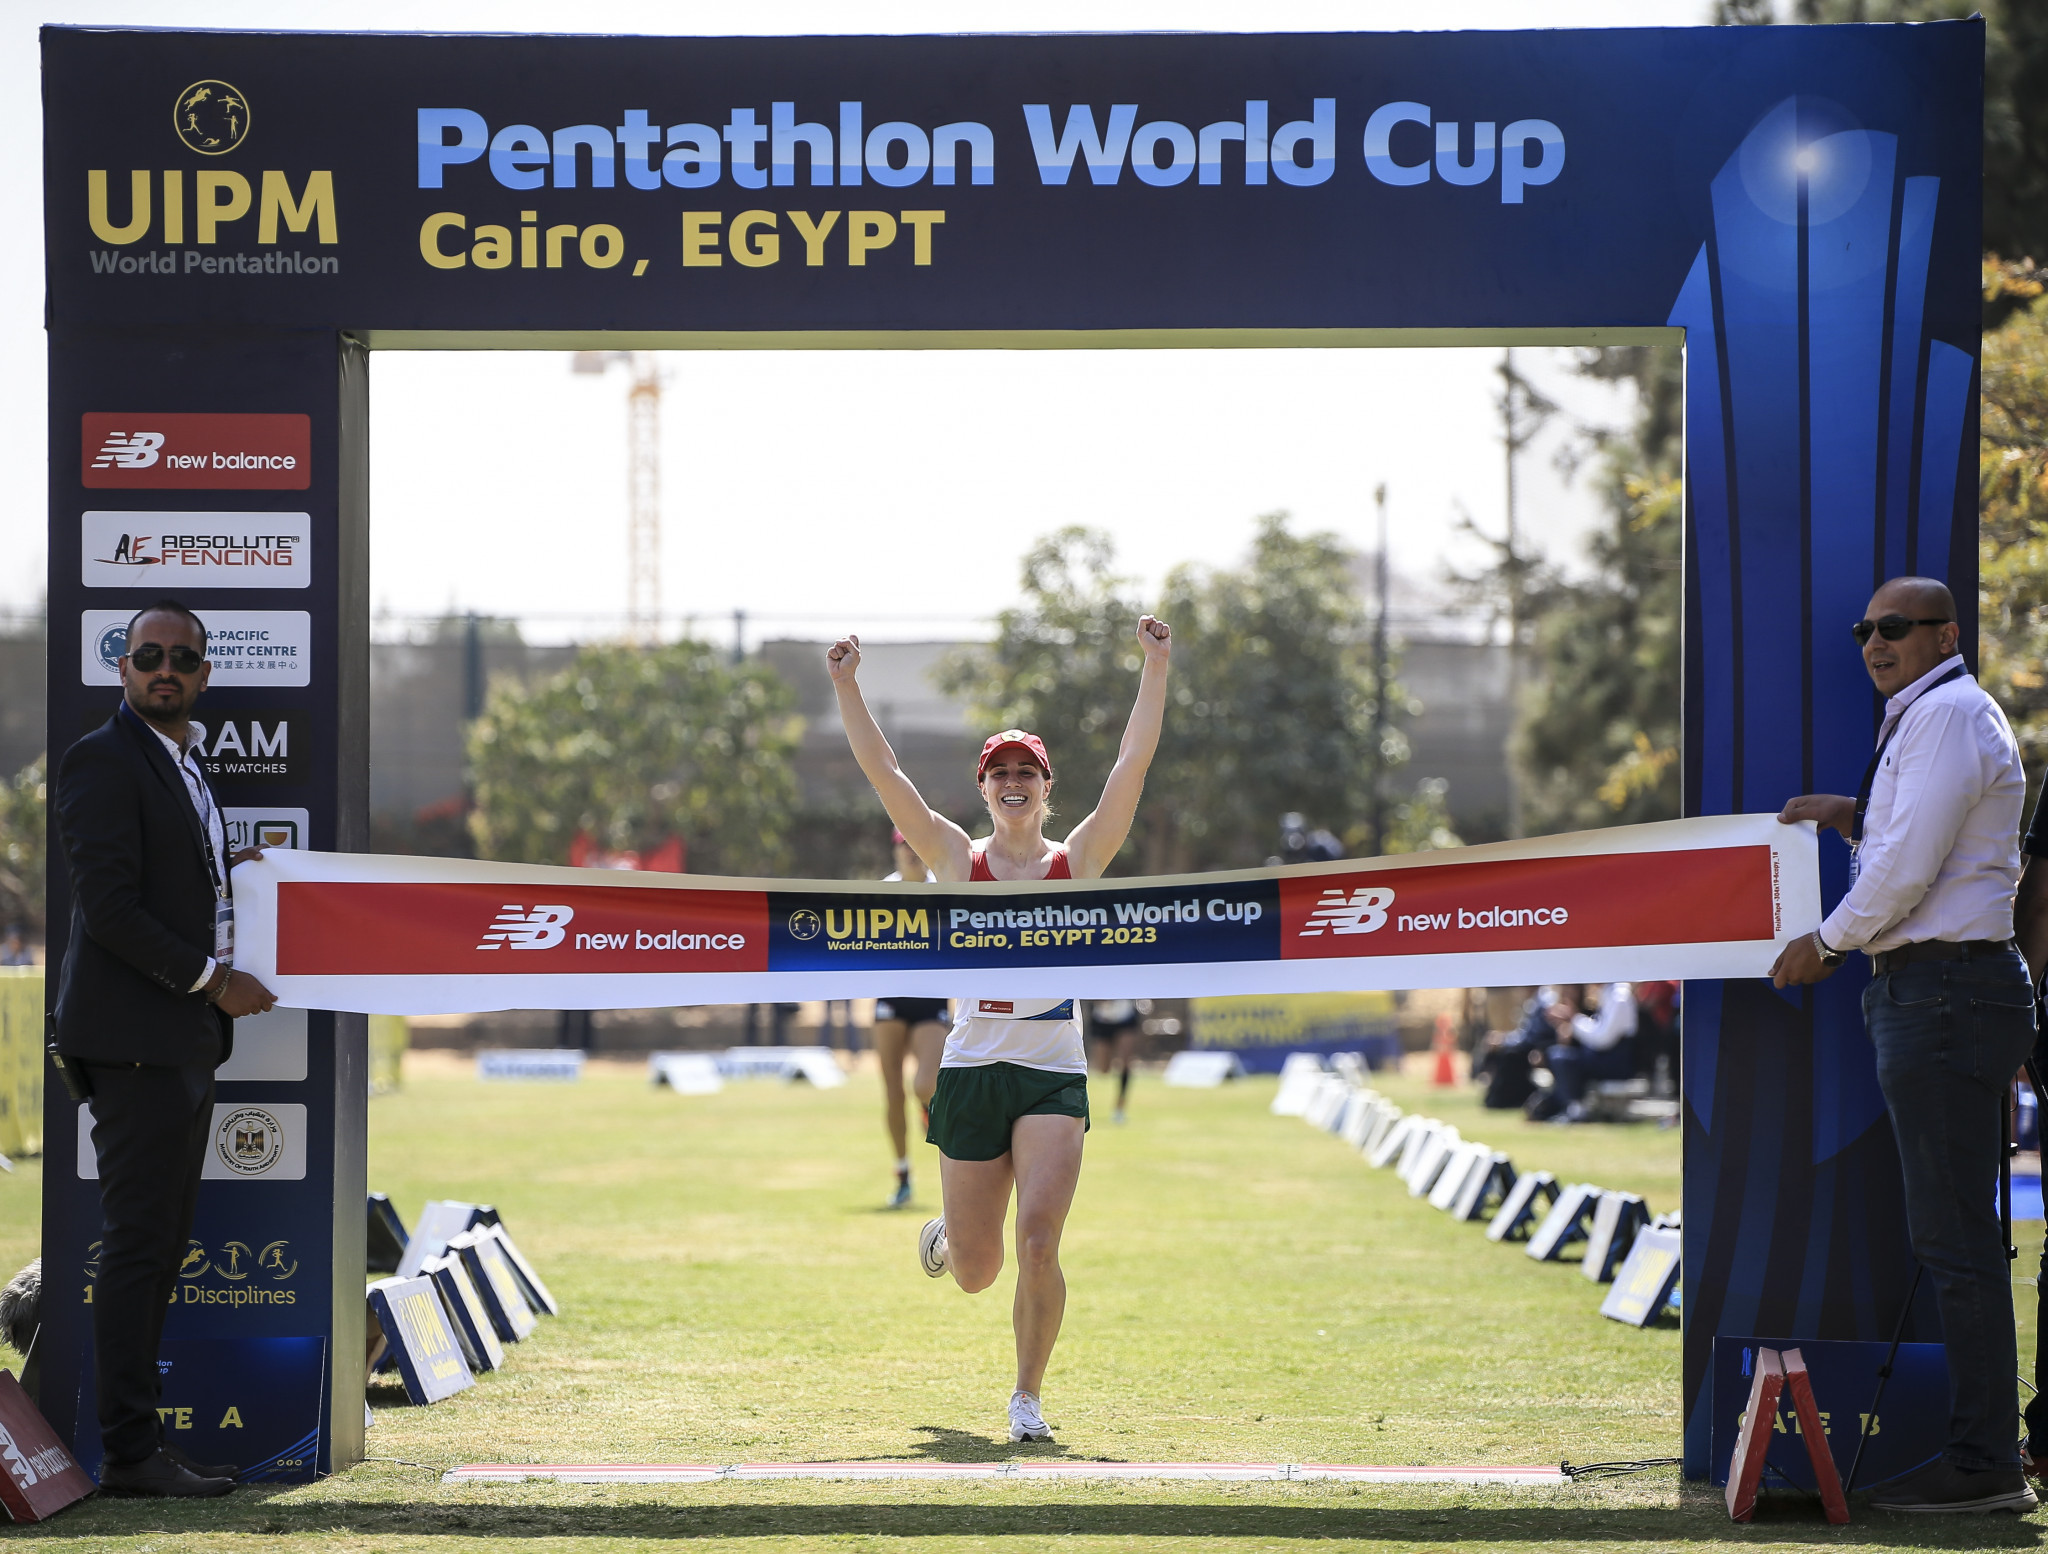 Michelle Gulyas won women's gold at the Pentathlon World Cup in Cairo ©UIPM